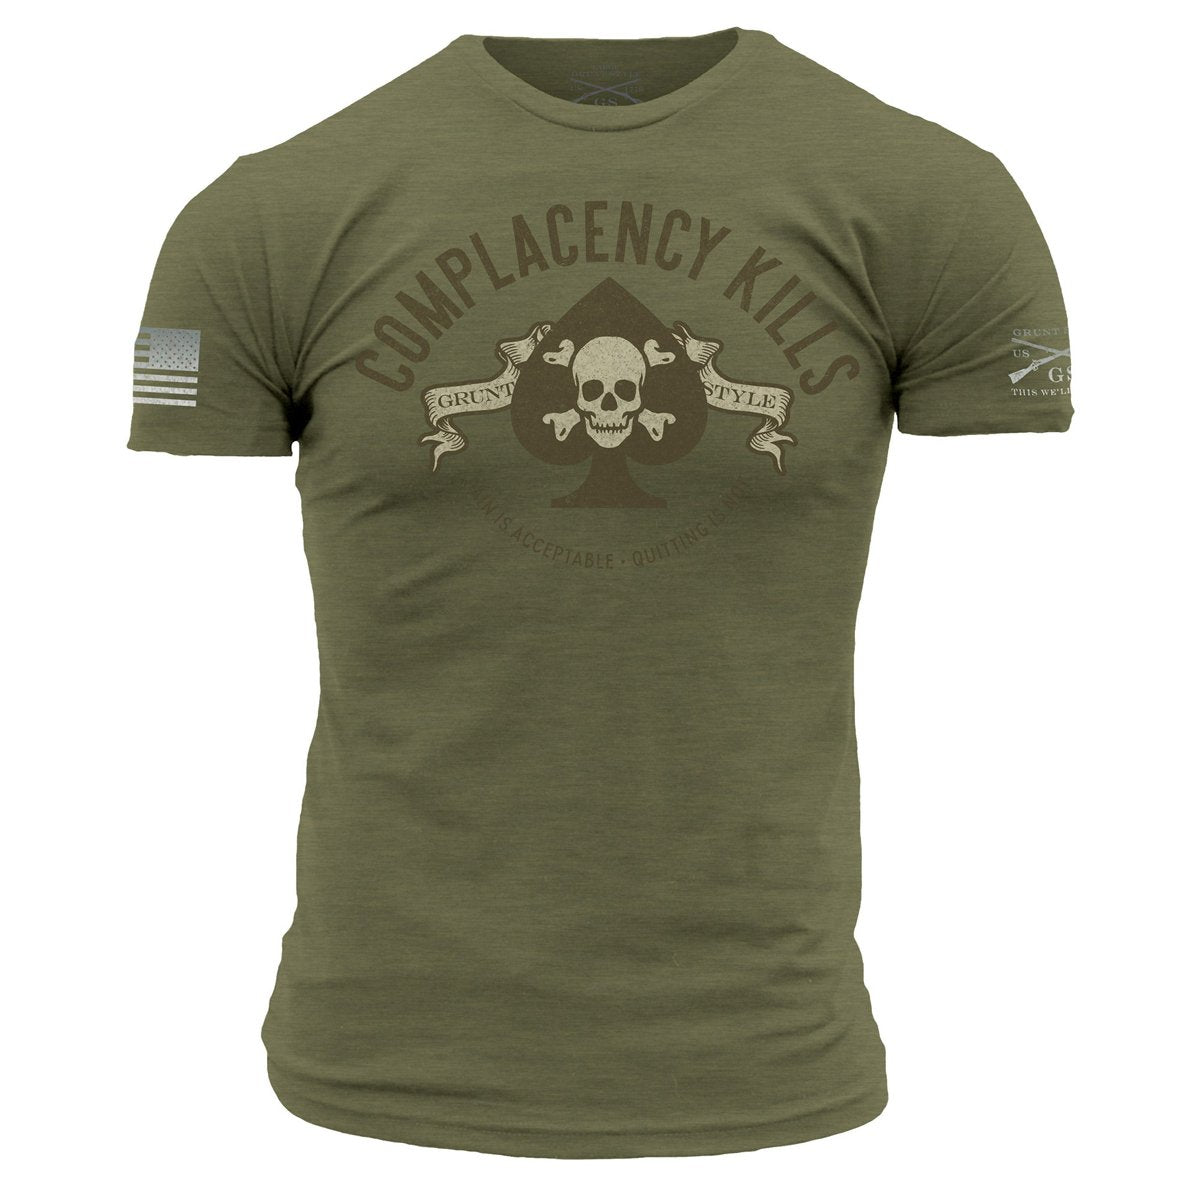 Military Green Complacency Kills Training T-Shirt